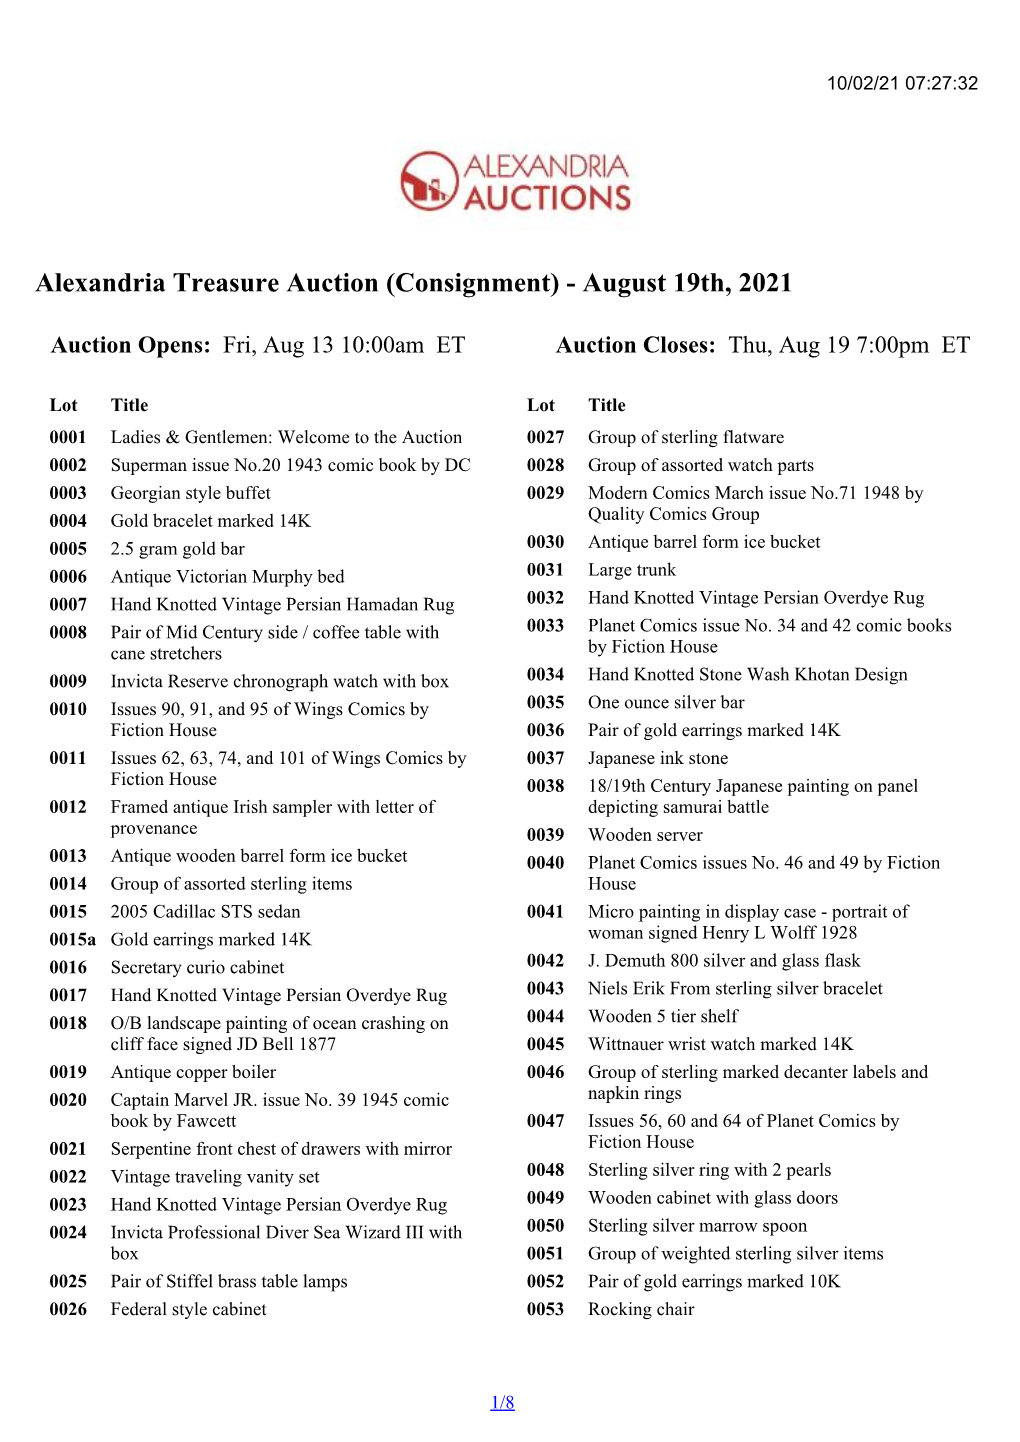 Alexandria Treasure Auction (Consignment) - August 19Th, 2021